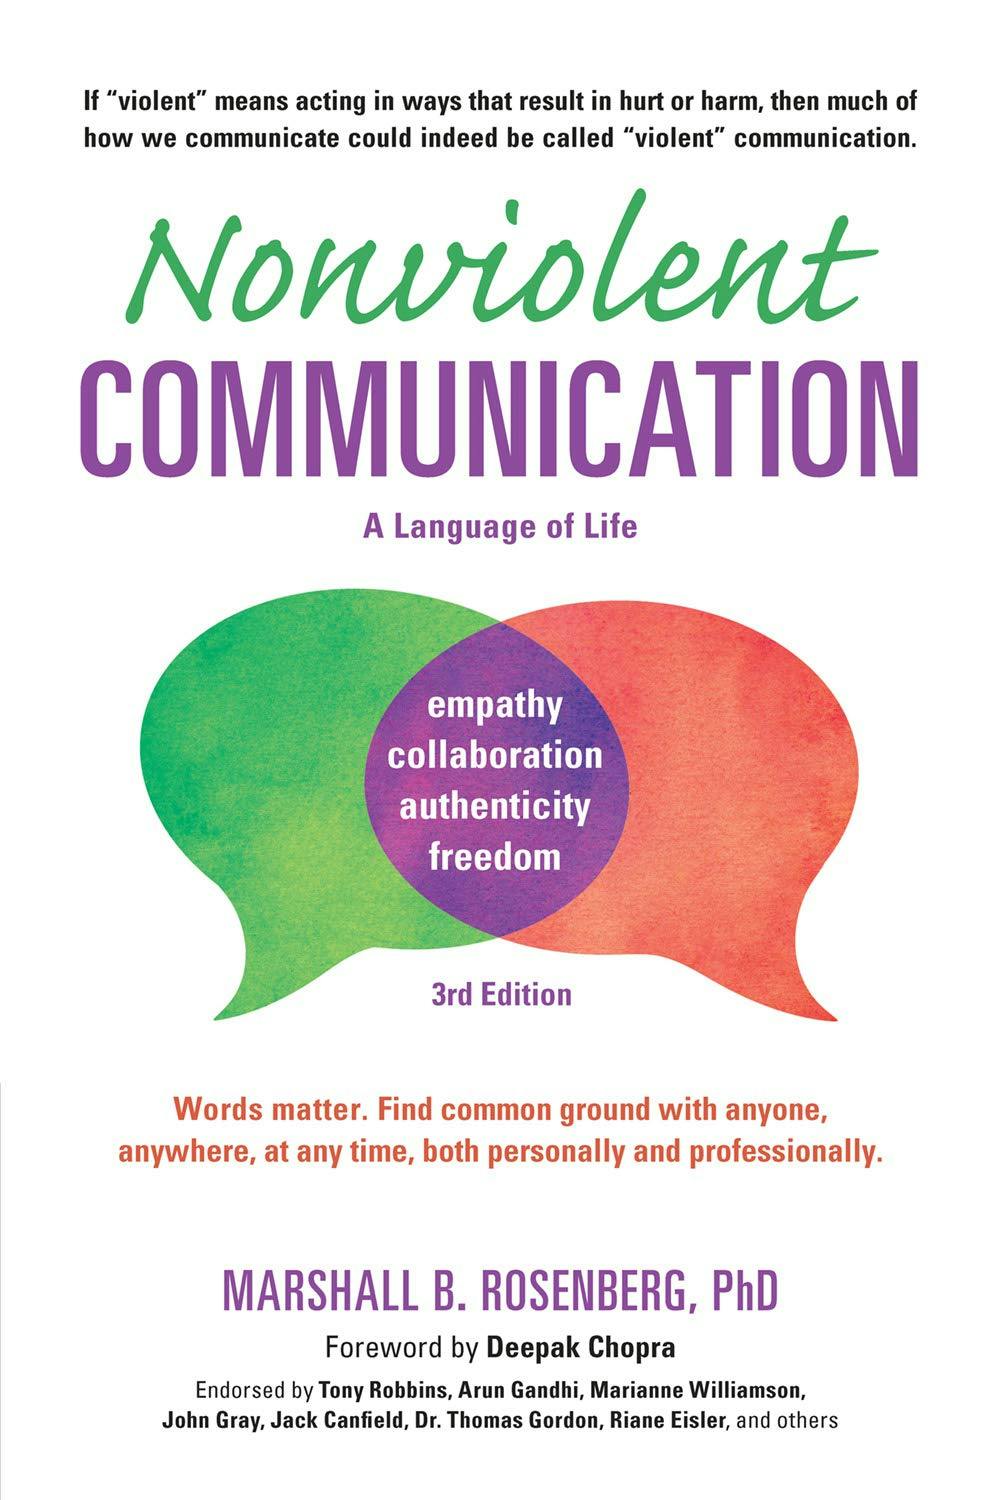 Nonviolent Communication - A language of life